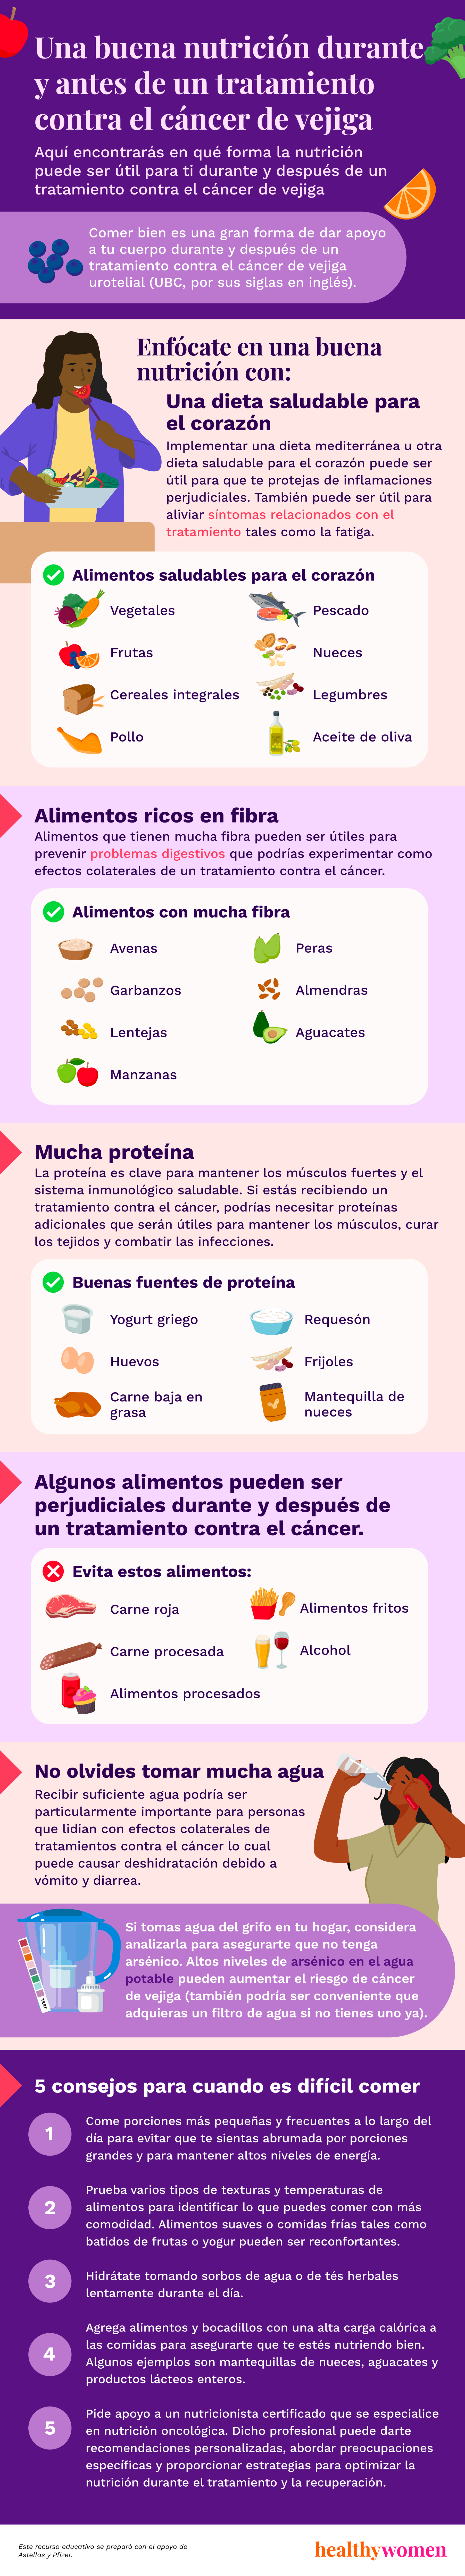 UBC-Nutrition-Infographic-Spanish